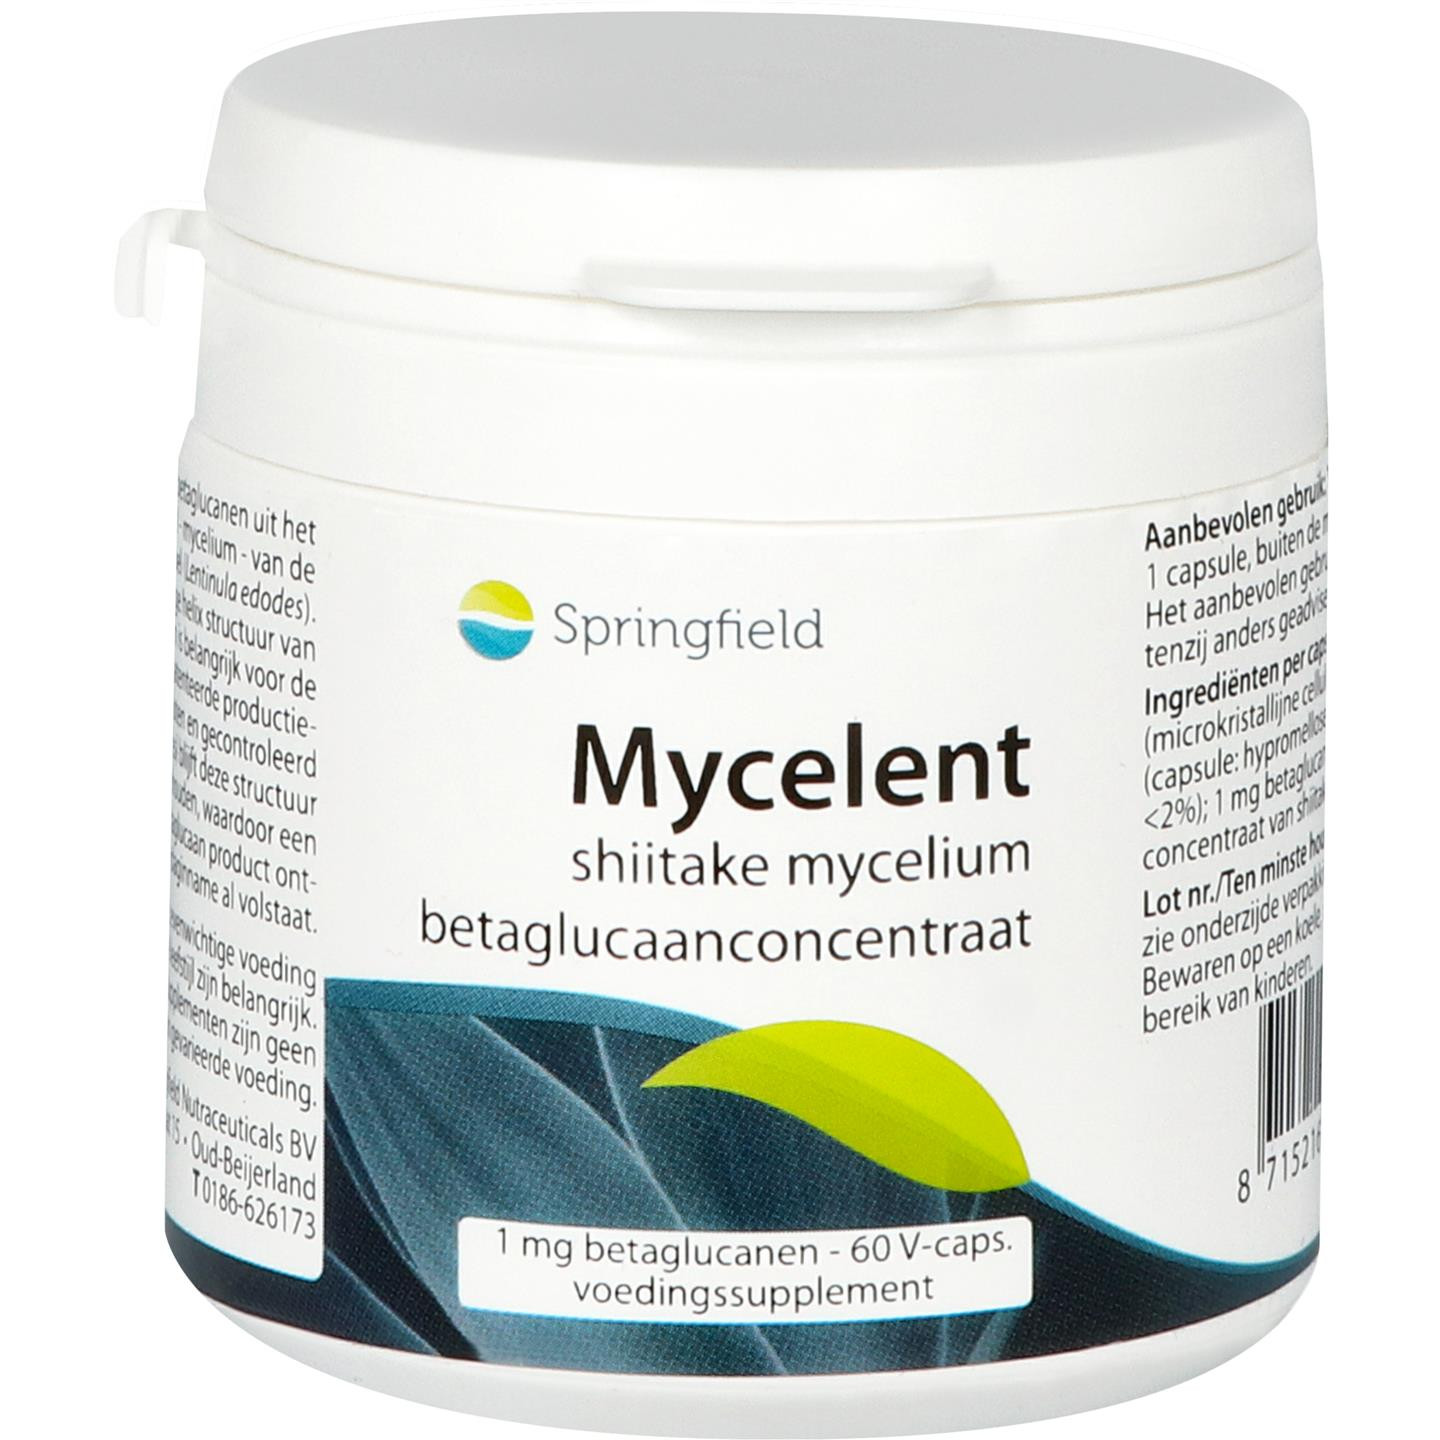 Mycelent